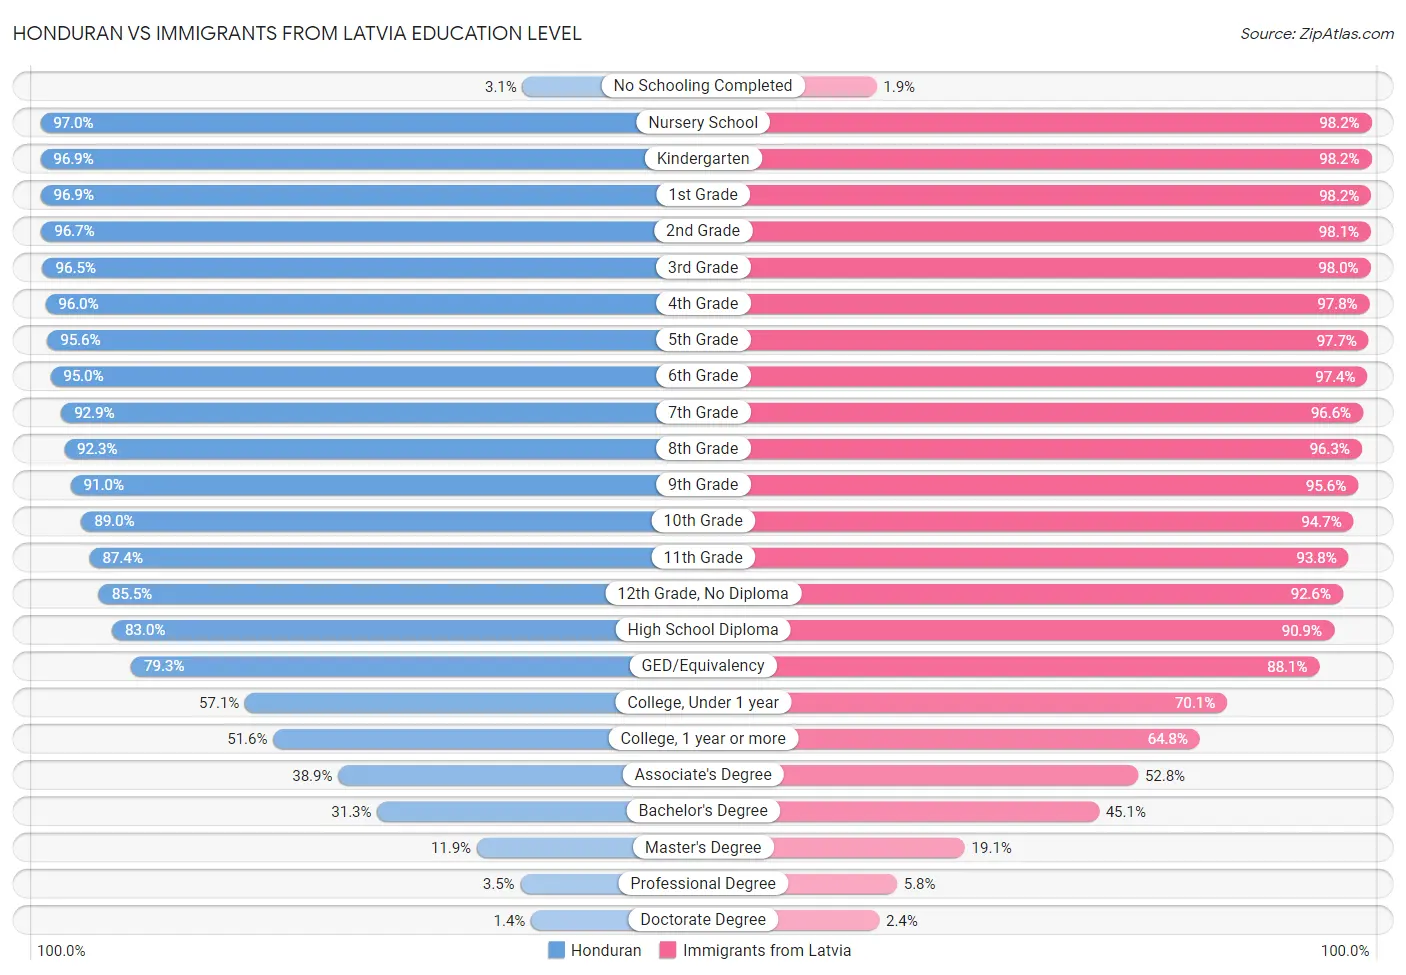 Honduran vs Immigrants from Latvia Education Level